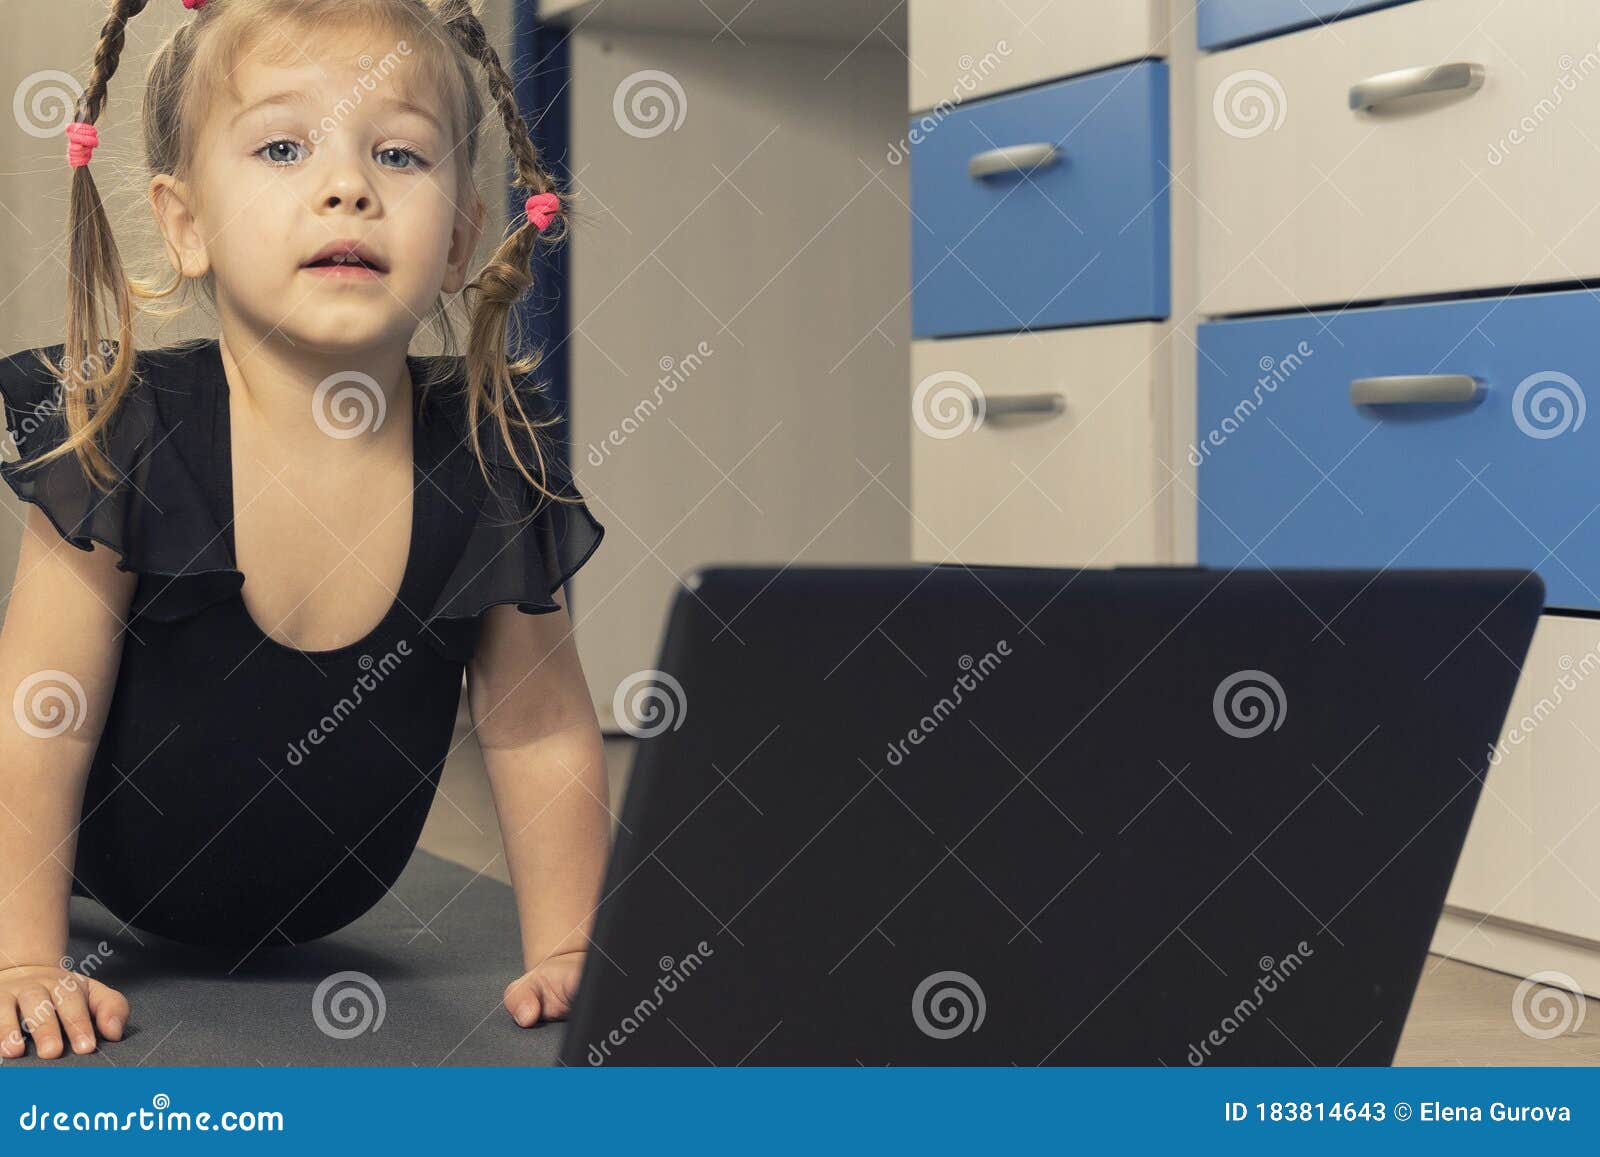 Child Does Rhythmic Gymnastics Online Stock Image